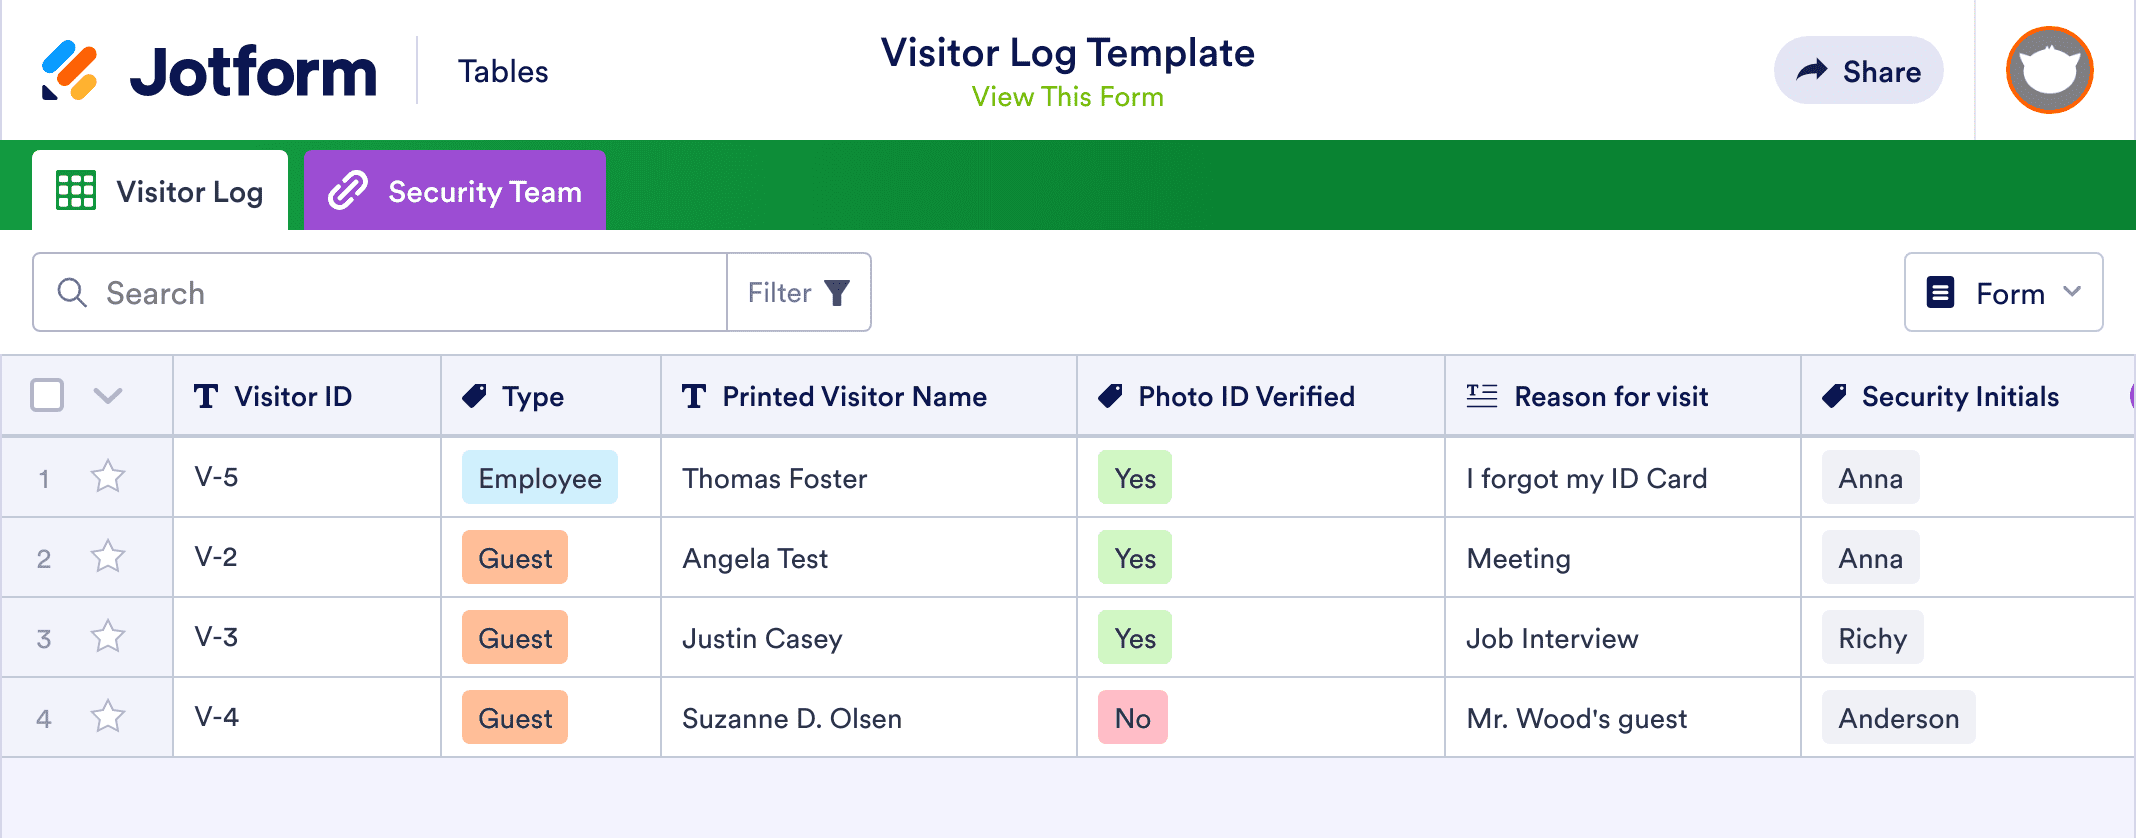 Visitor Log Template | Jotform Tables